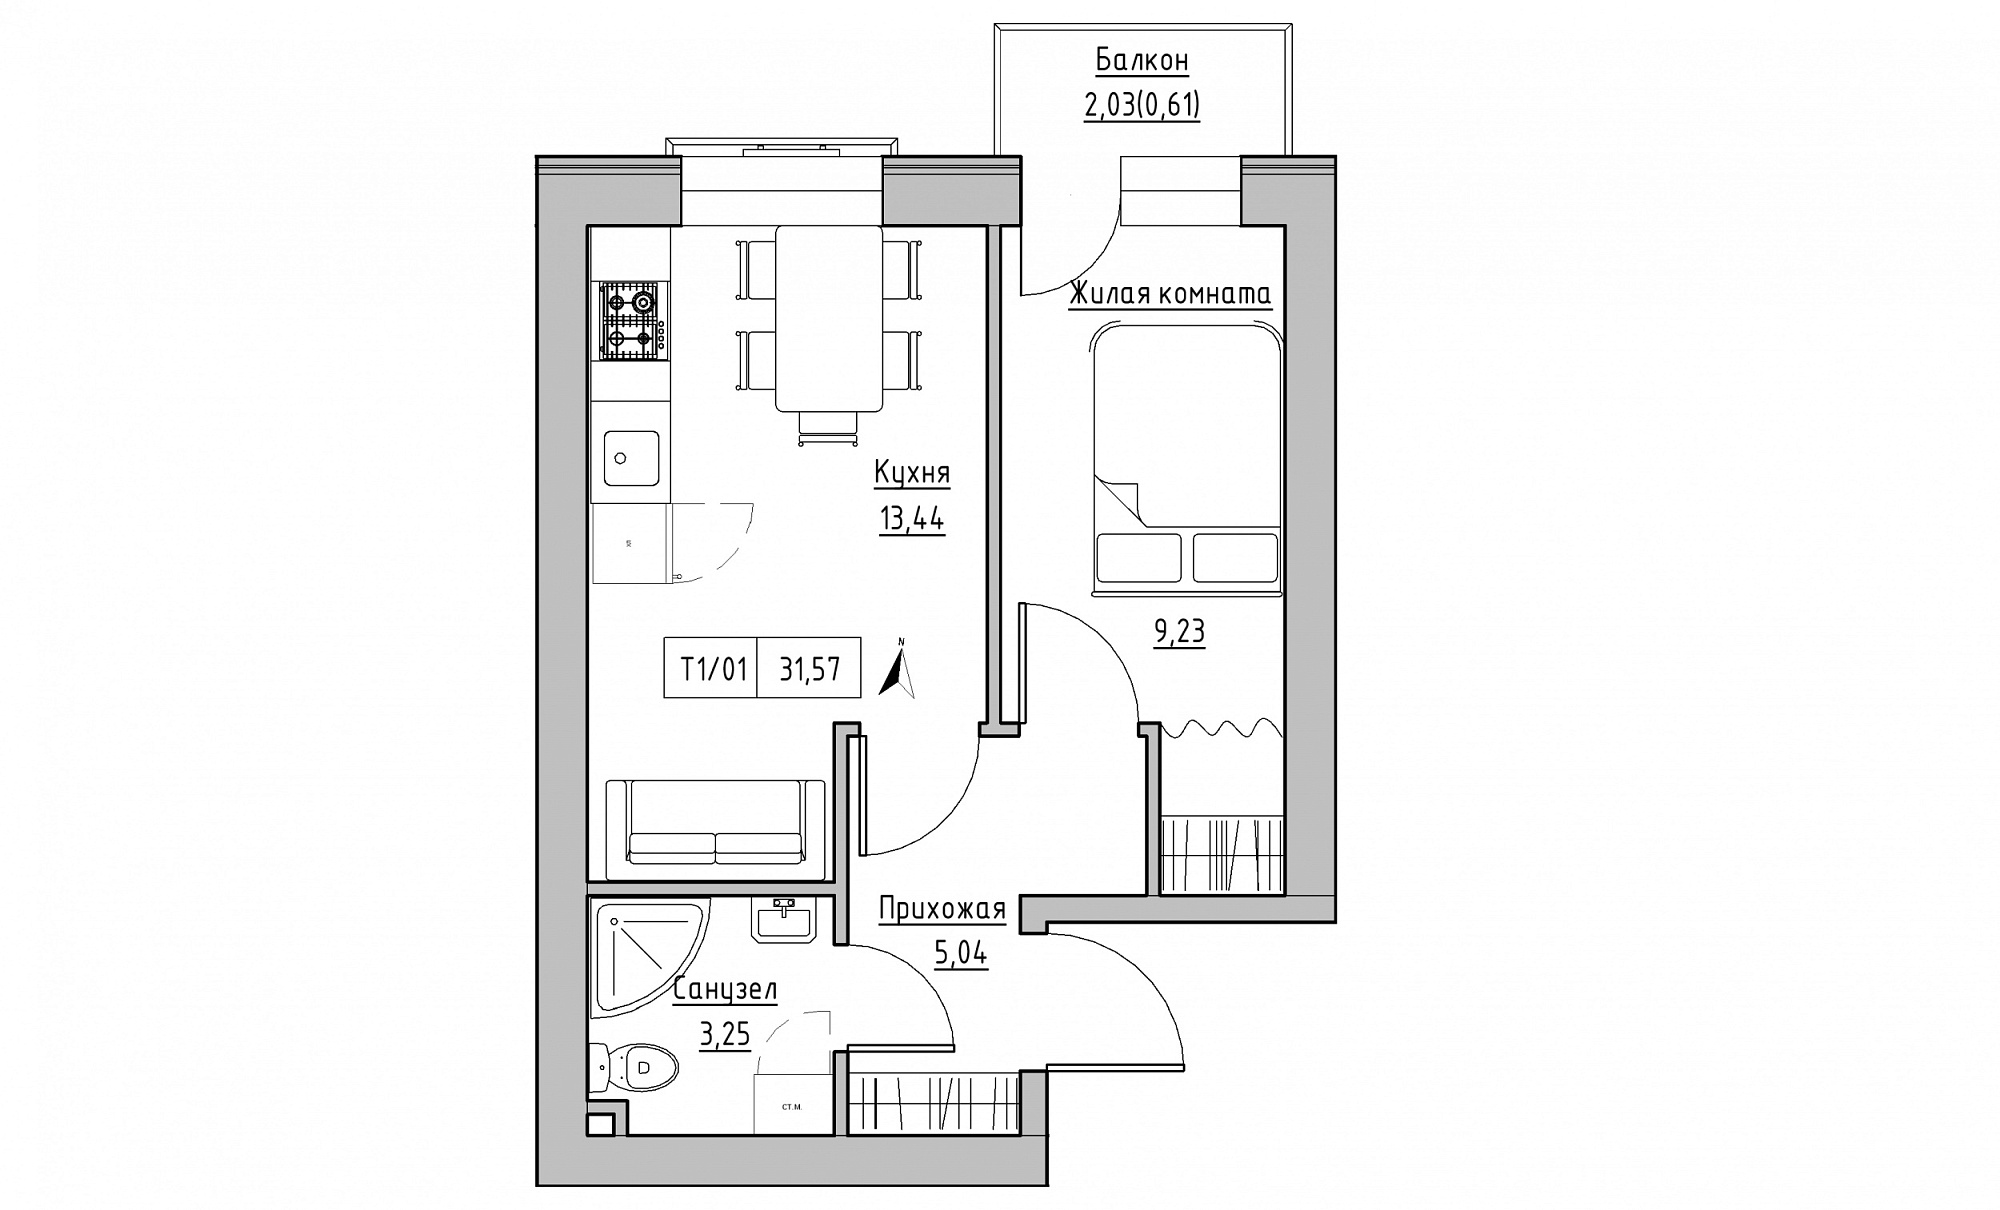 Planning 1-rm flats area 31.57m2, KS-015-05/0016.